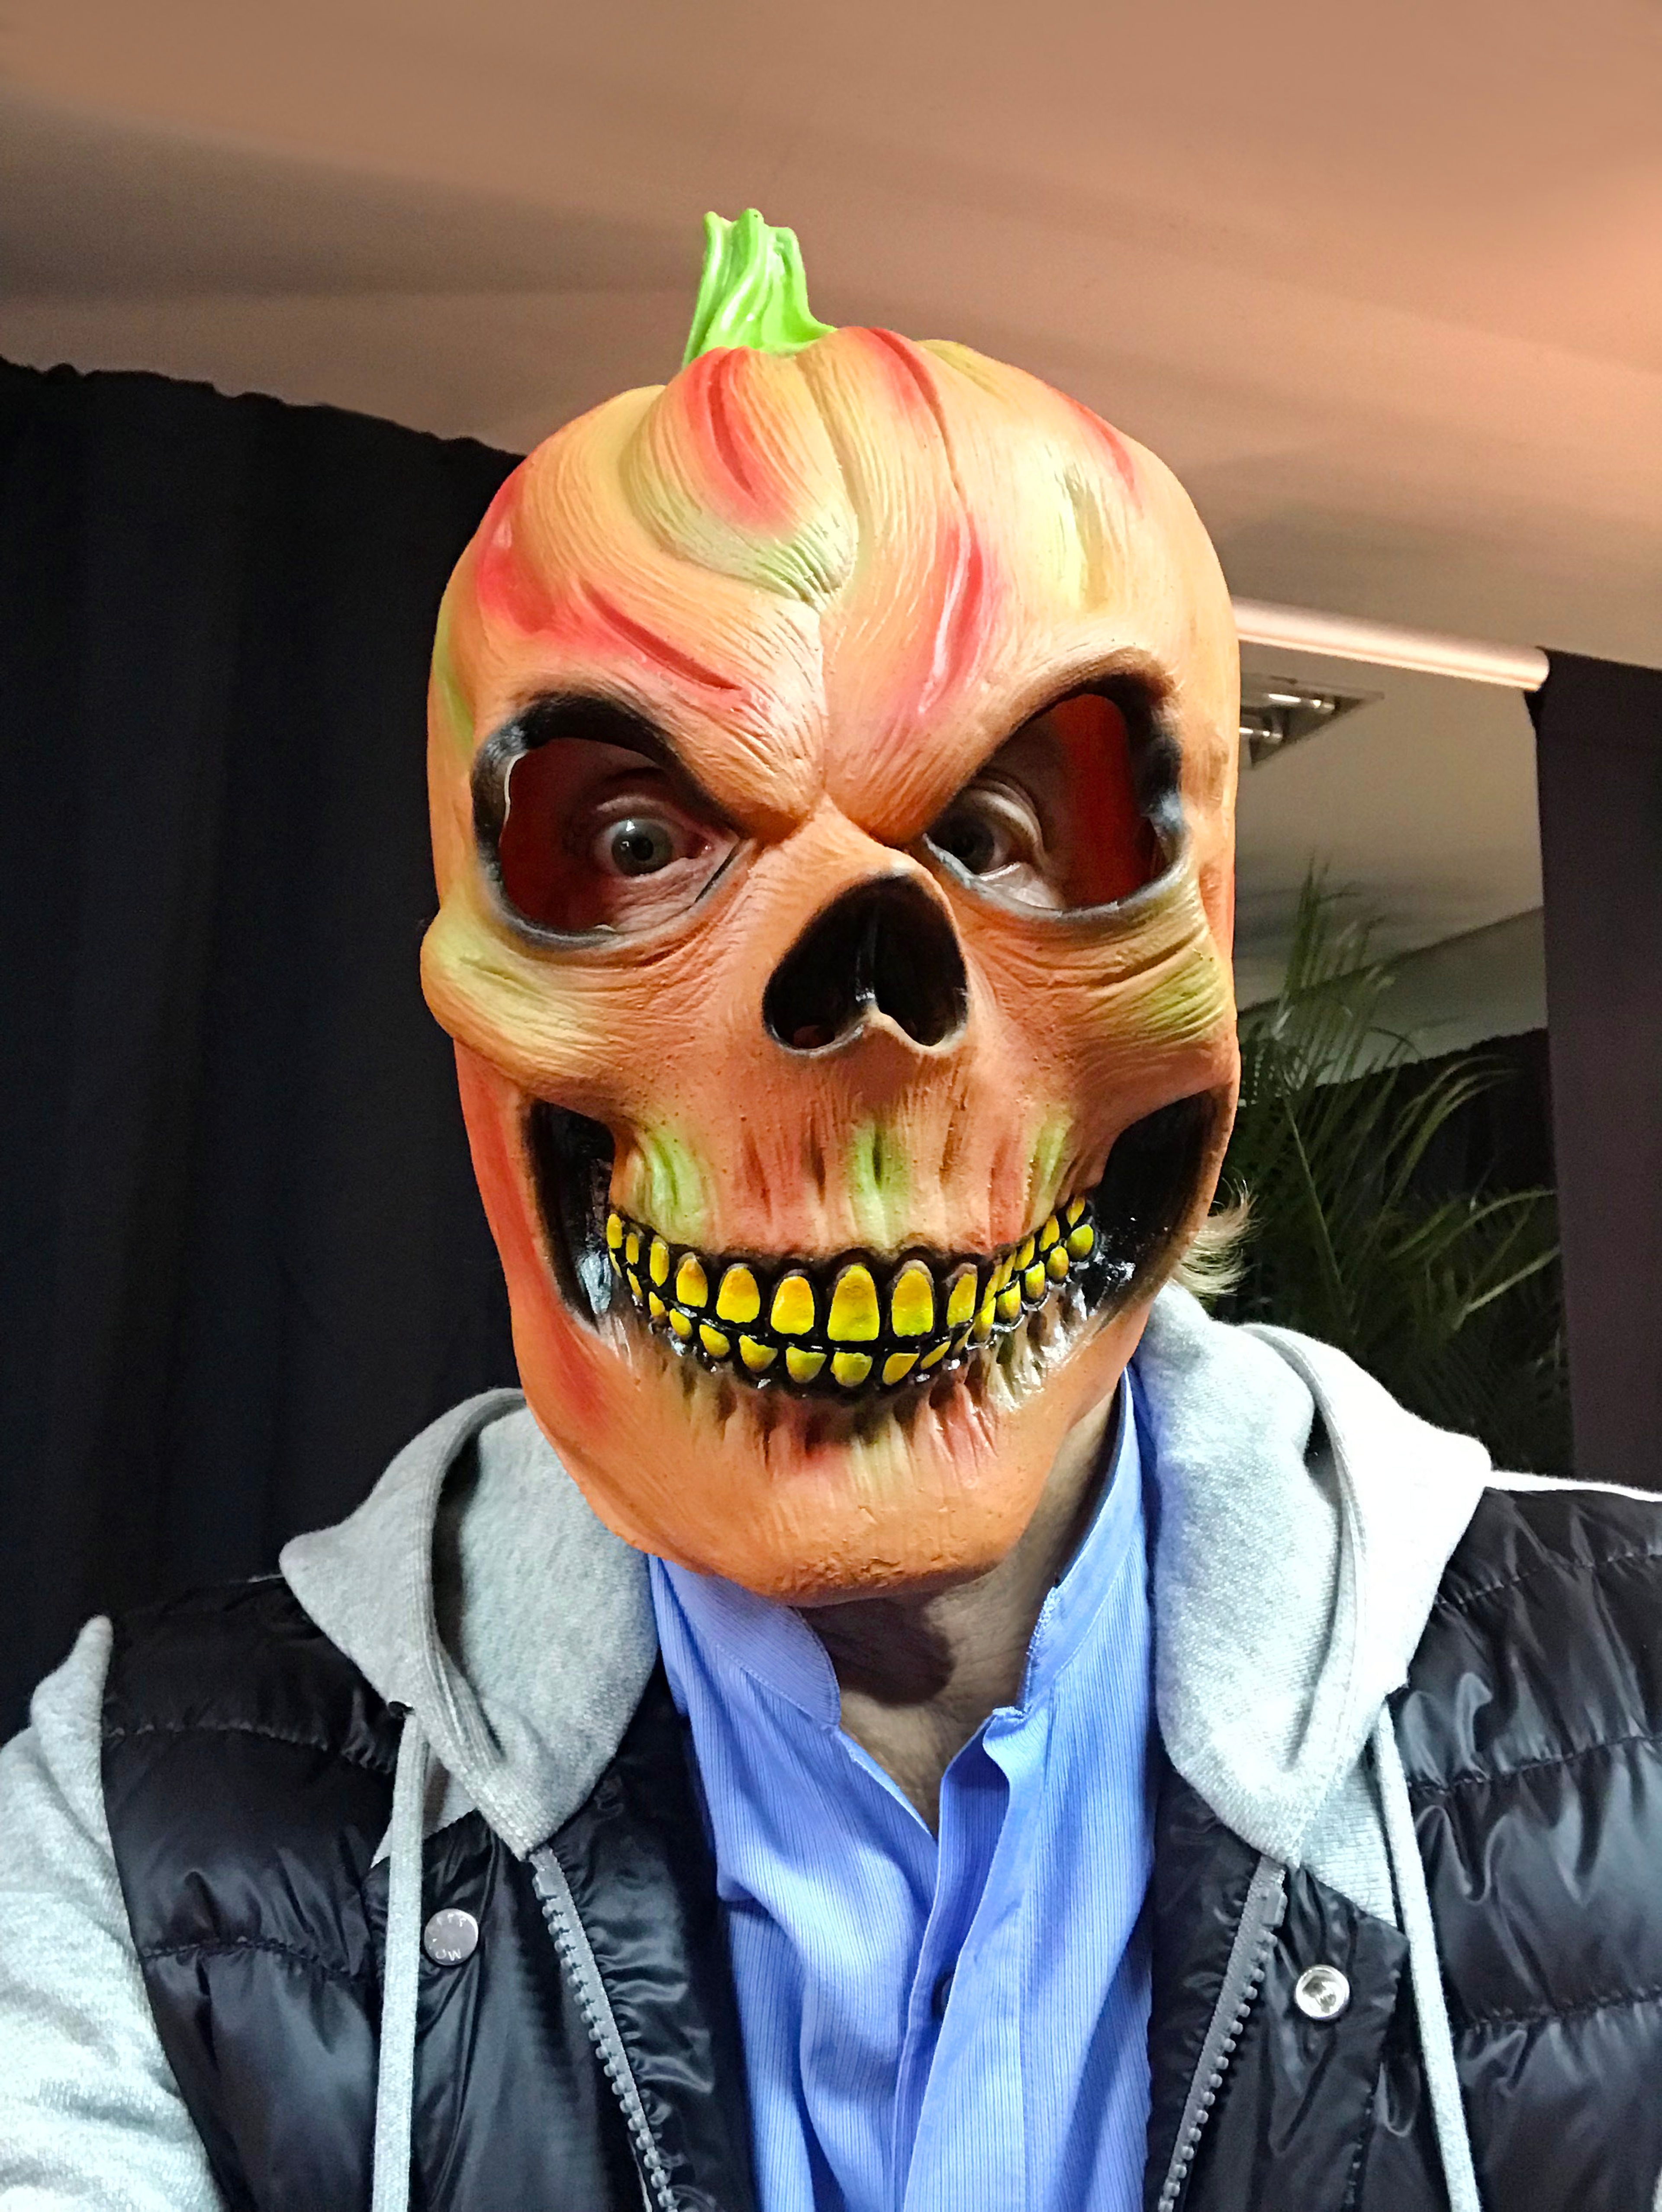 Photo of Paul wearing a spooky pumpkin mask to celebrate Halloween